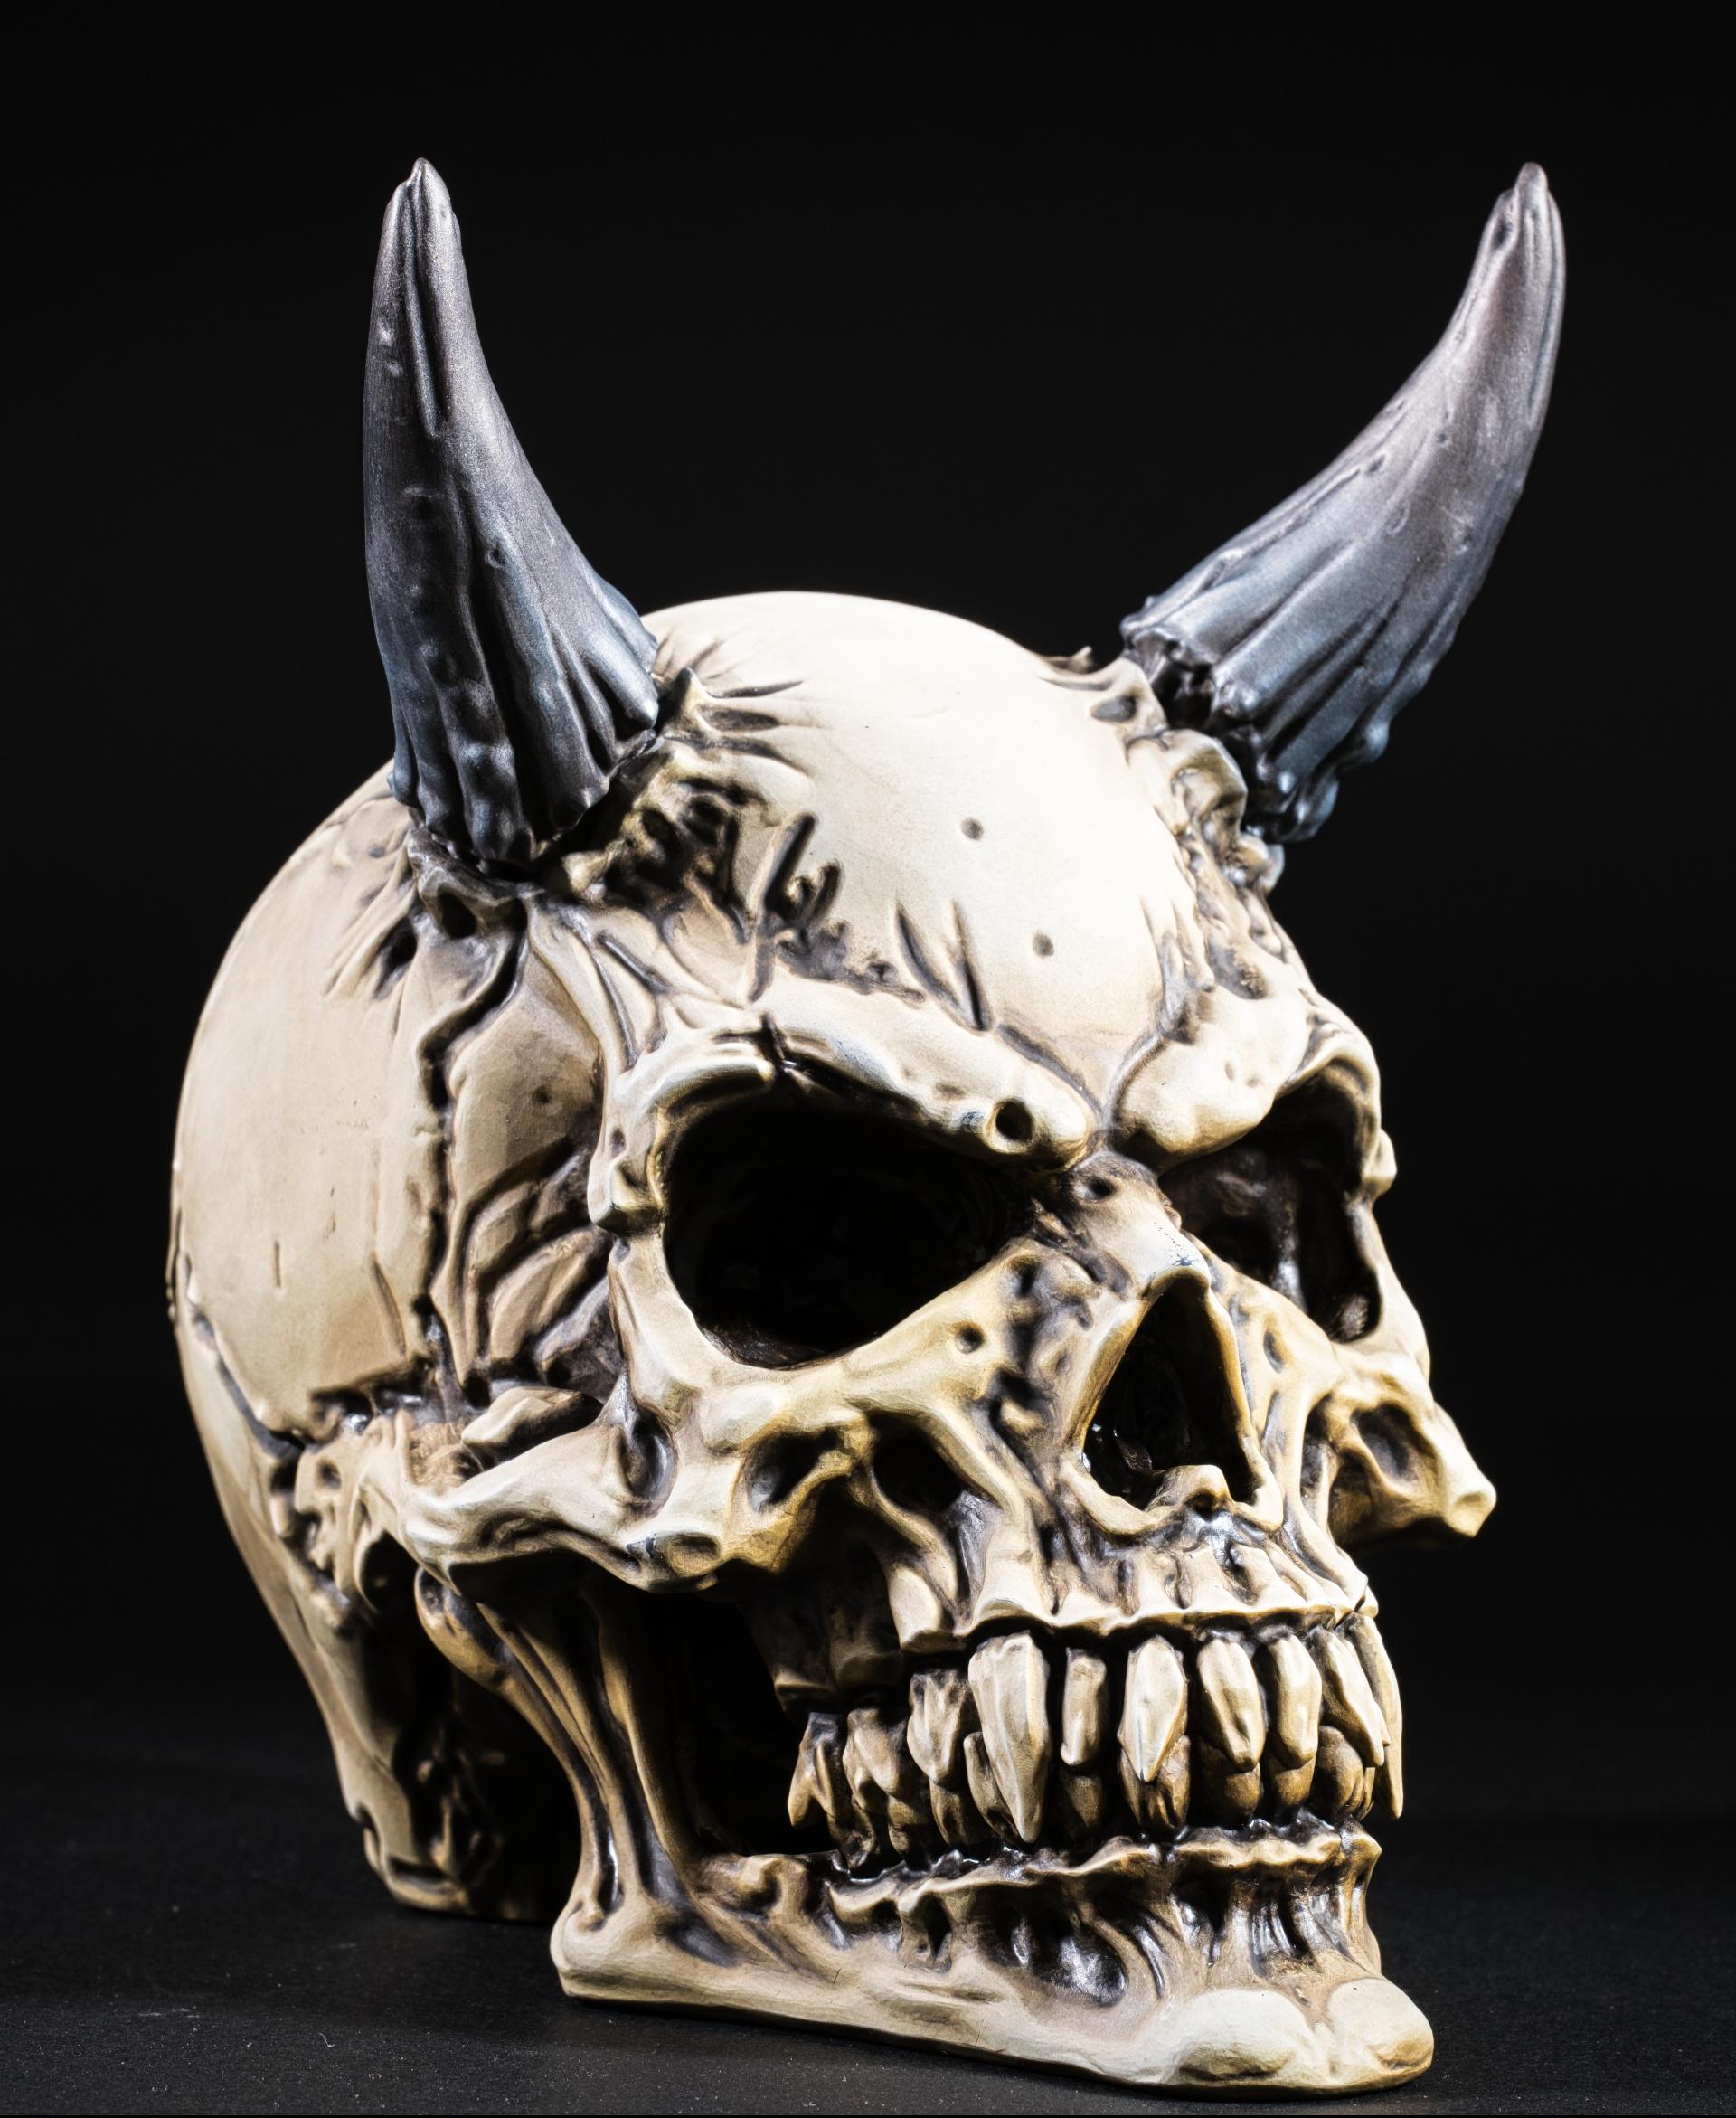 Demon Skull  - Demon Skull
Printer: Elegoo Saturn 2
Resin: Siraya Tech Navy Grey
Painted with acrylics & oils - 3d model